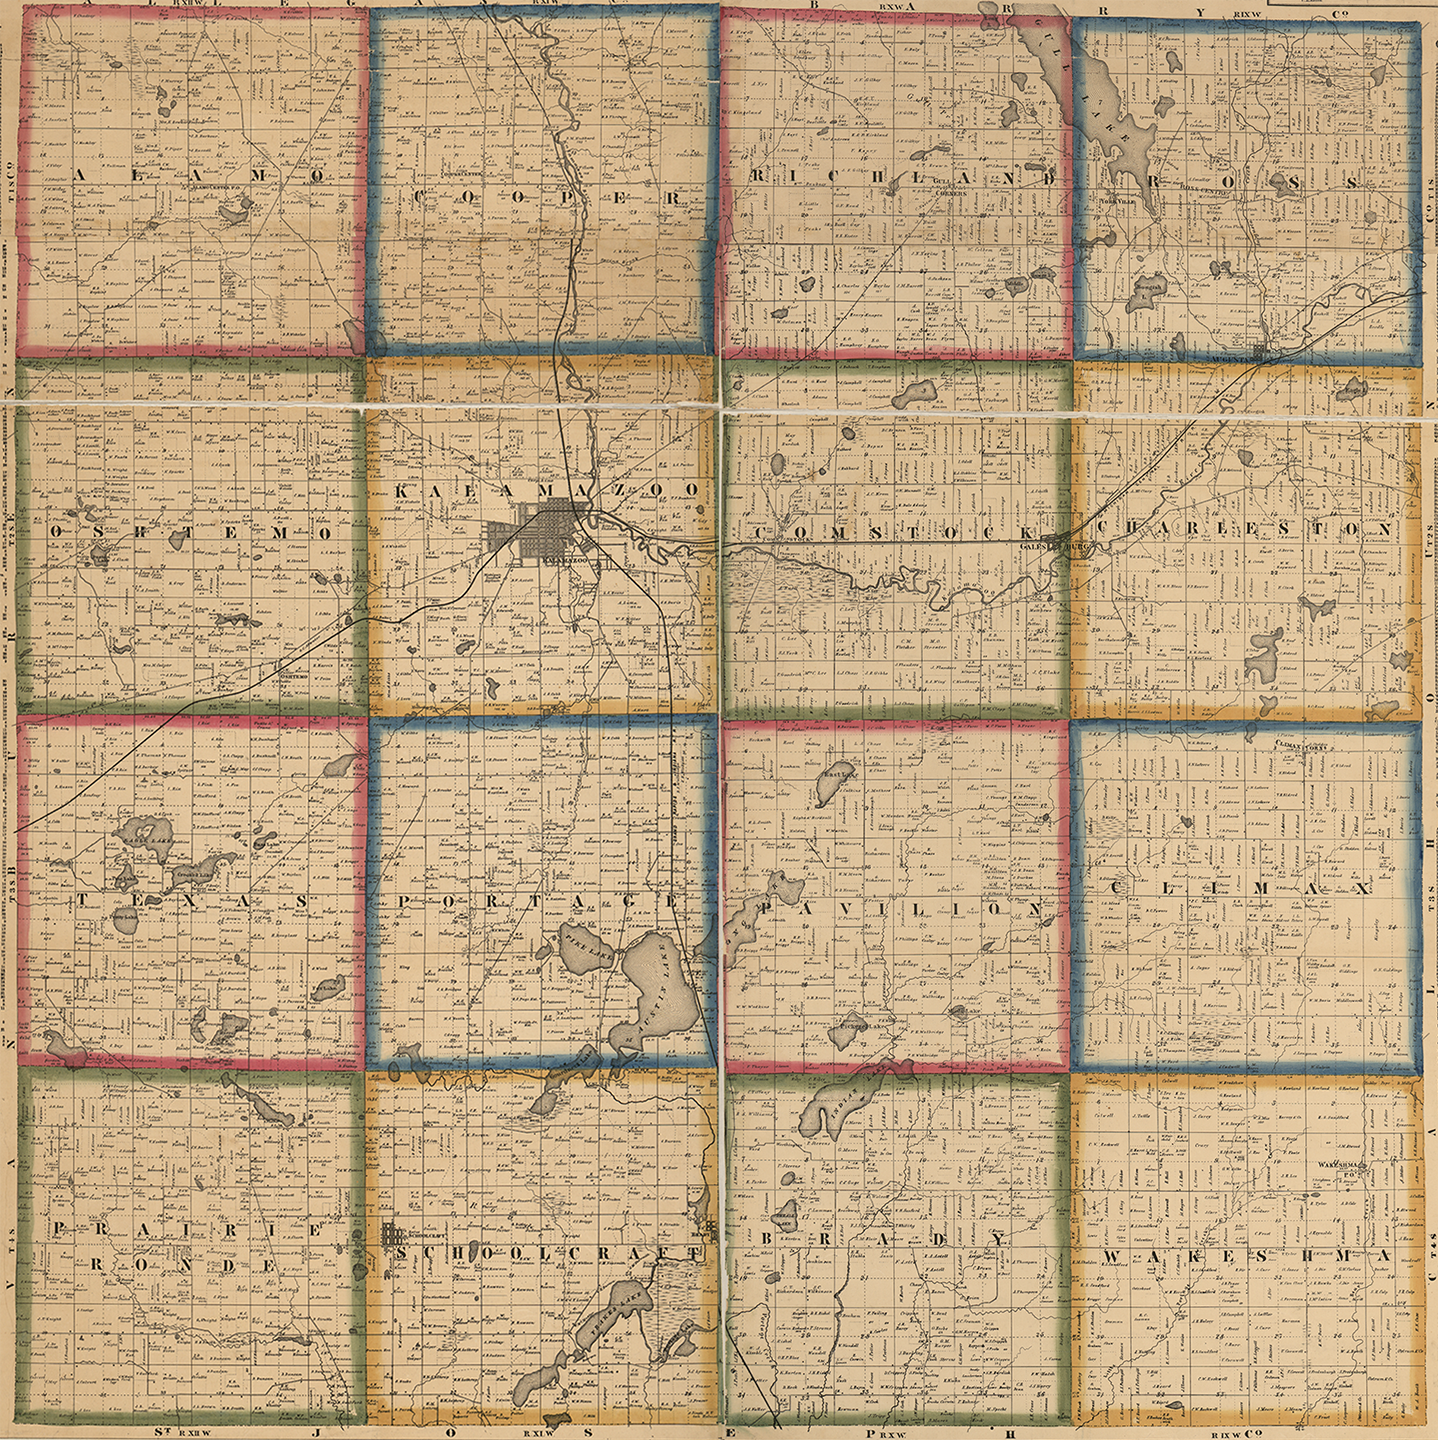 1861 Kalamazoo County Michigan landownership map